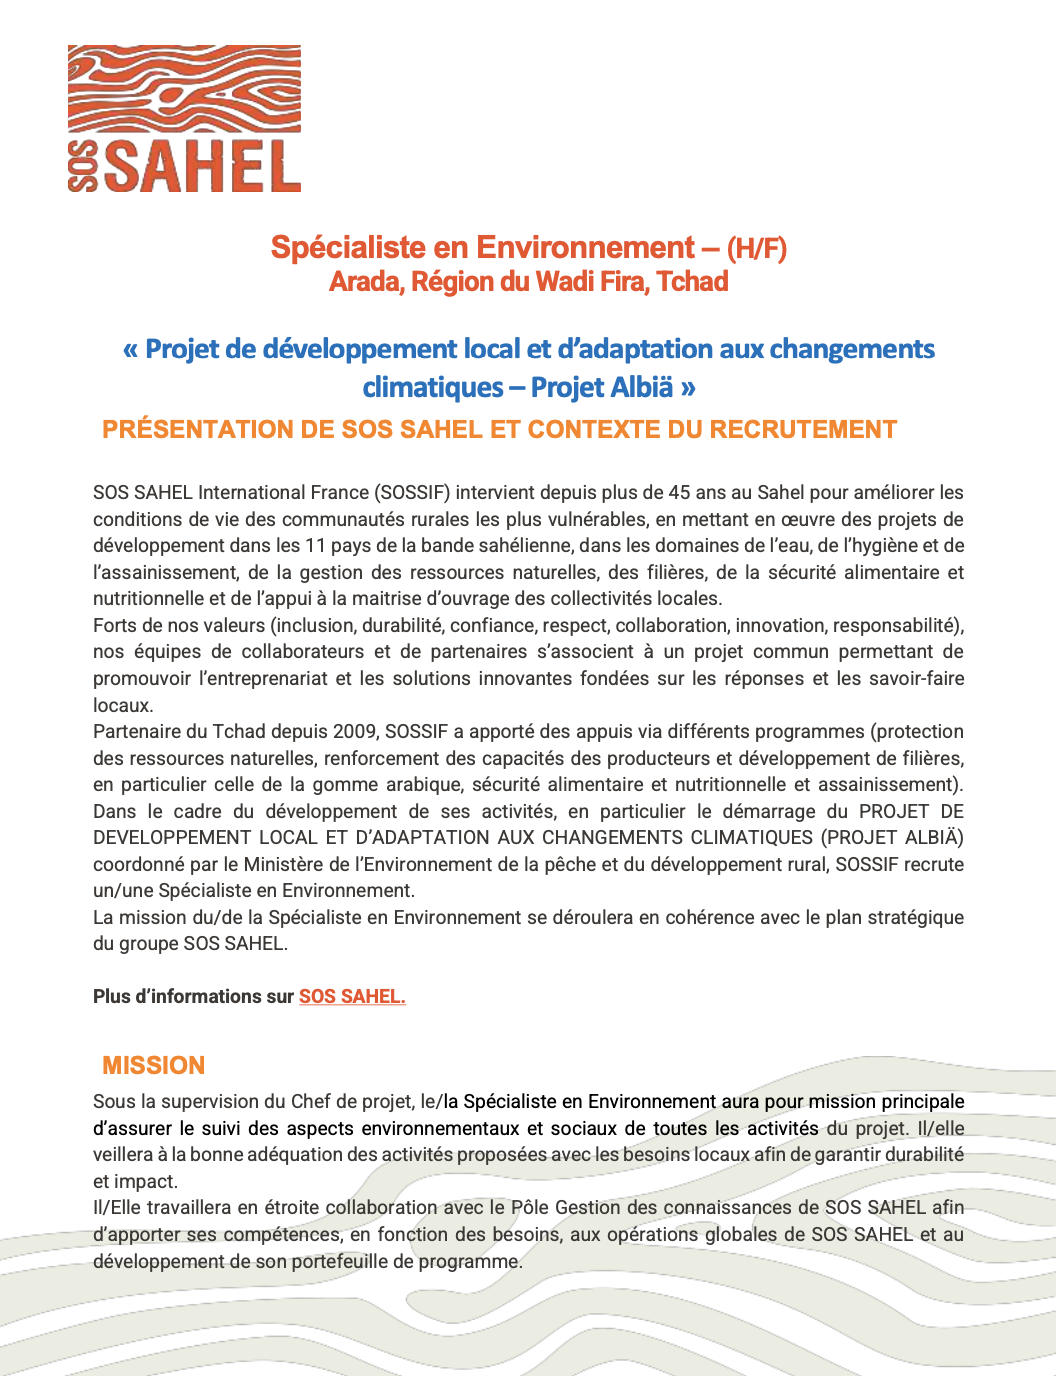 Tchad : SOS SAHEL International France (SOSSIF) recrute un(e) Spécialiste en Environnement (H/F) à Arada